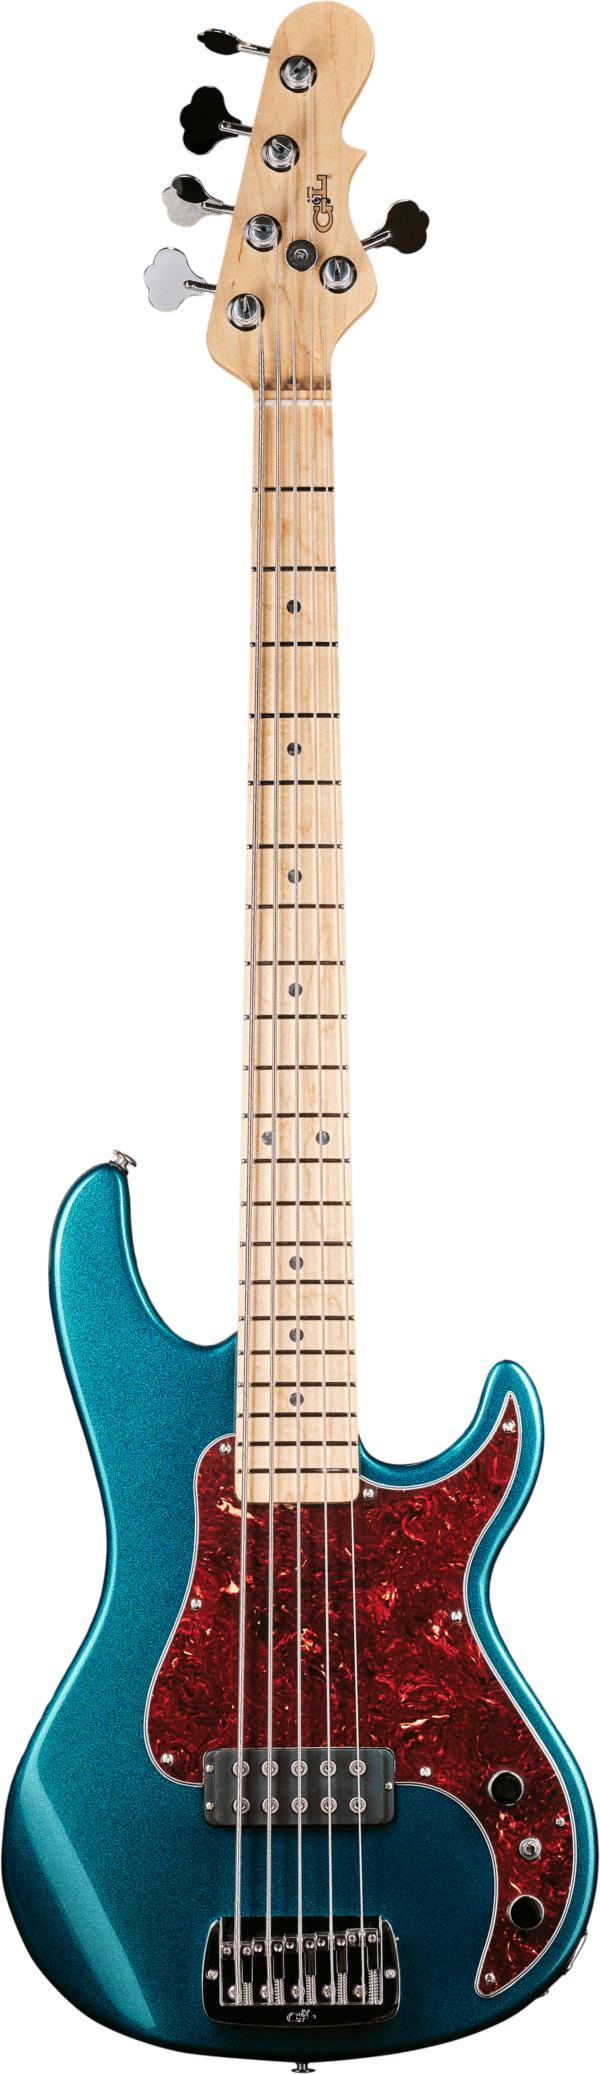 G&L Guitars Kiloton 5 Build To Order USA Emerald Blue Metallic Super Light Weight